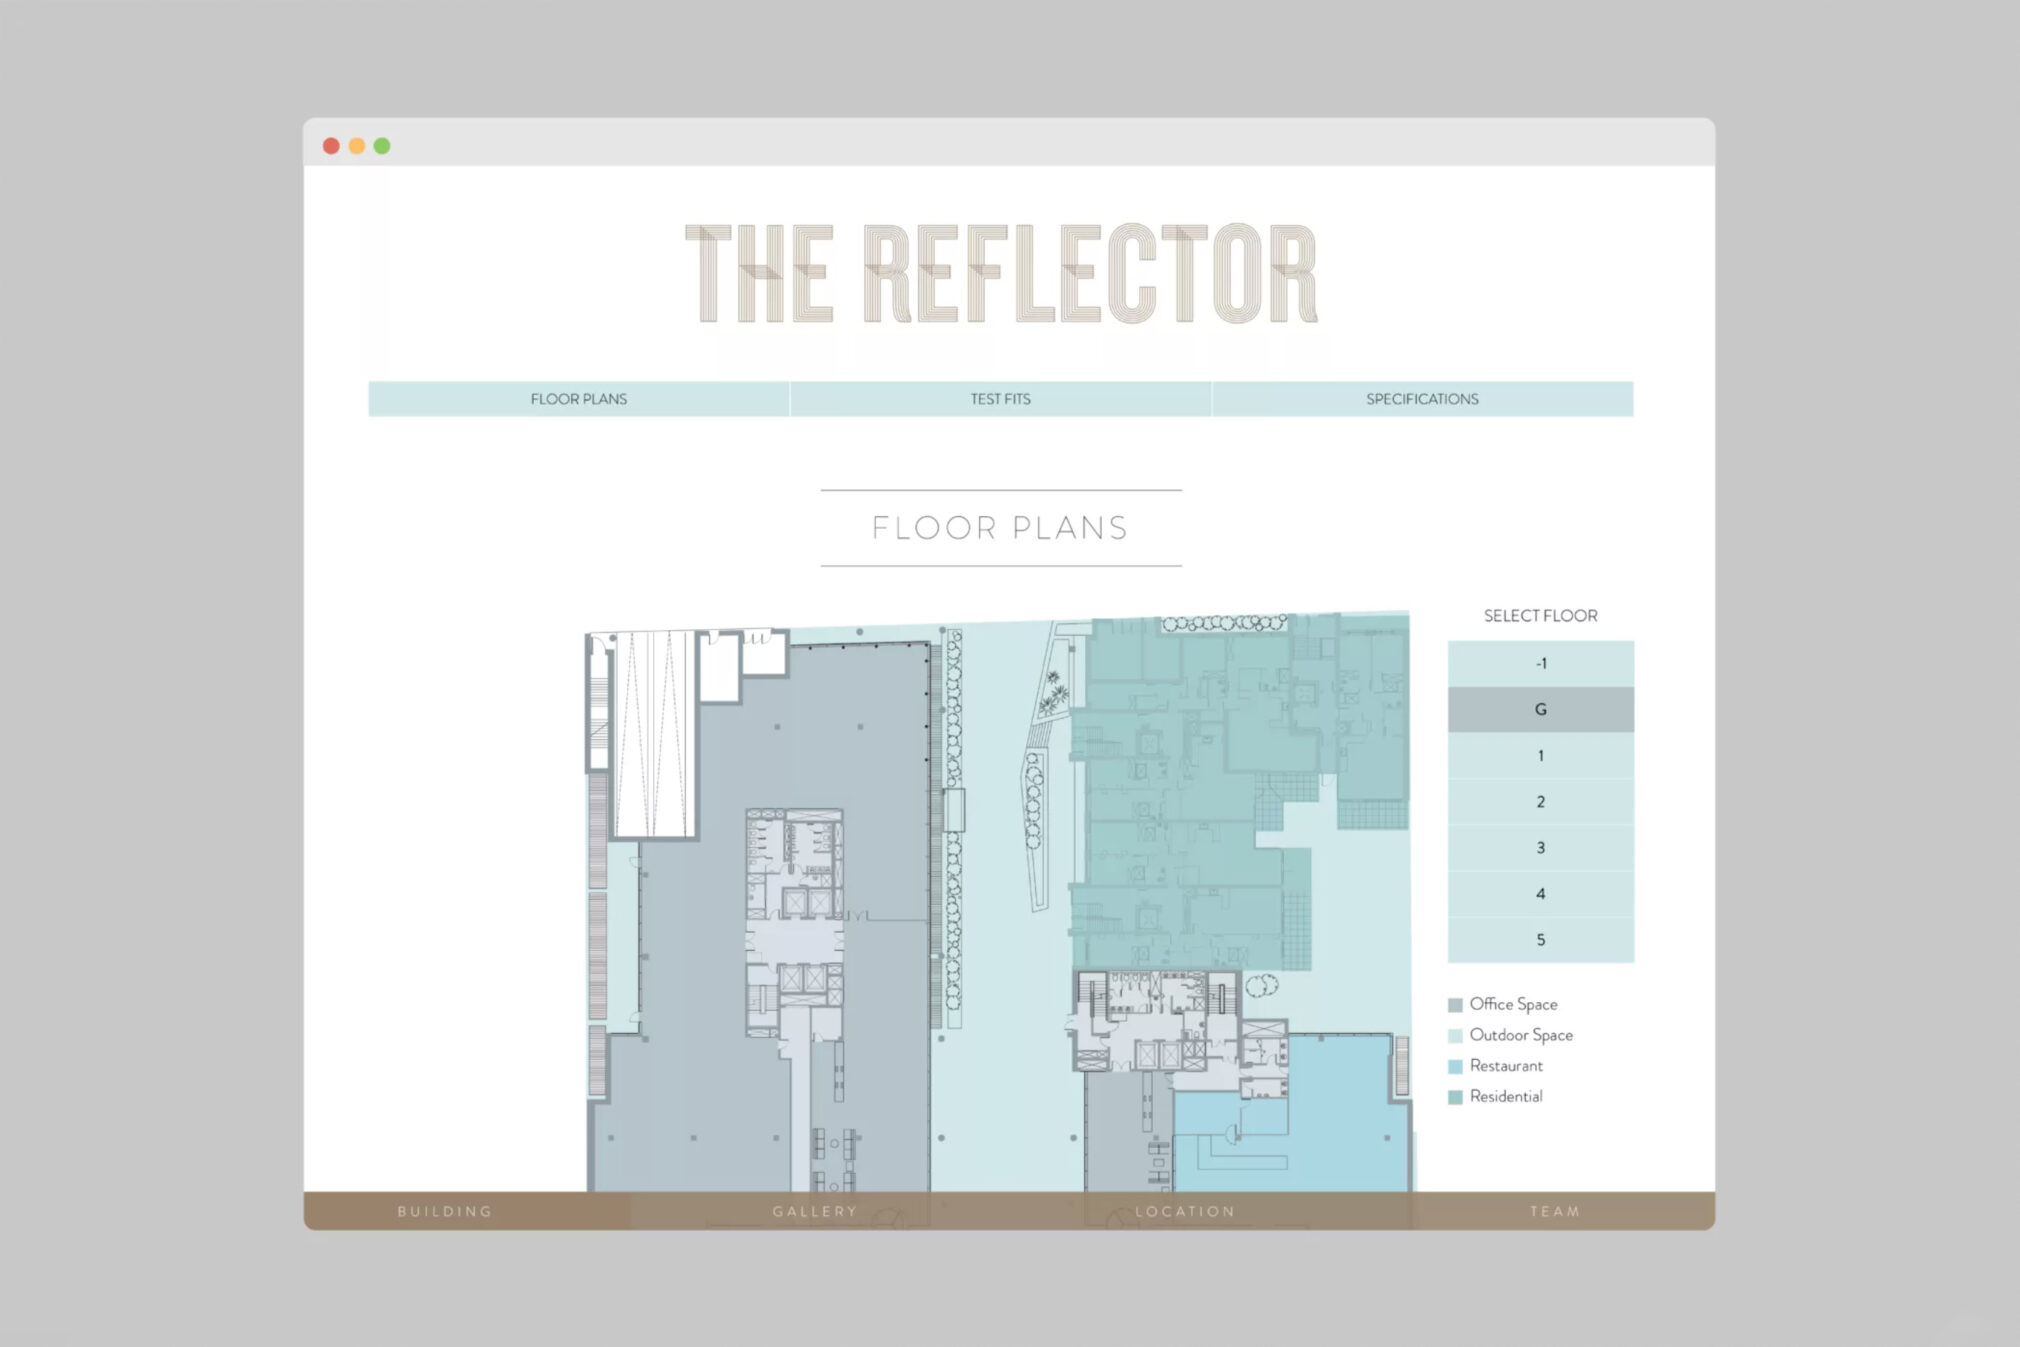 The Reflector site floorplans